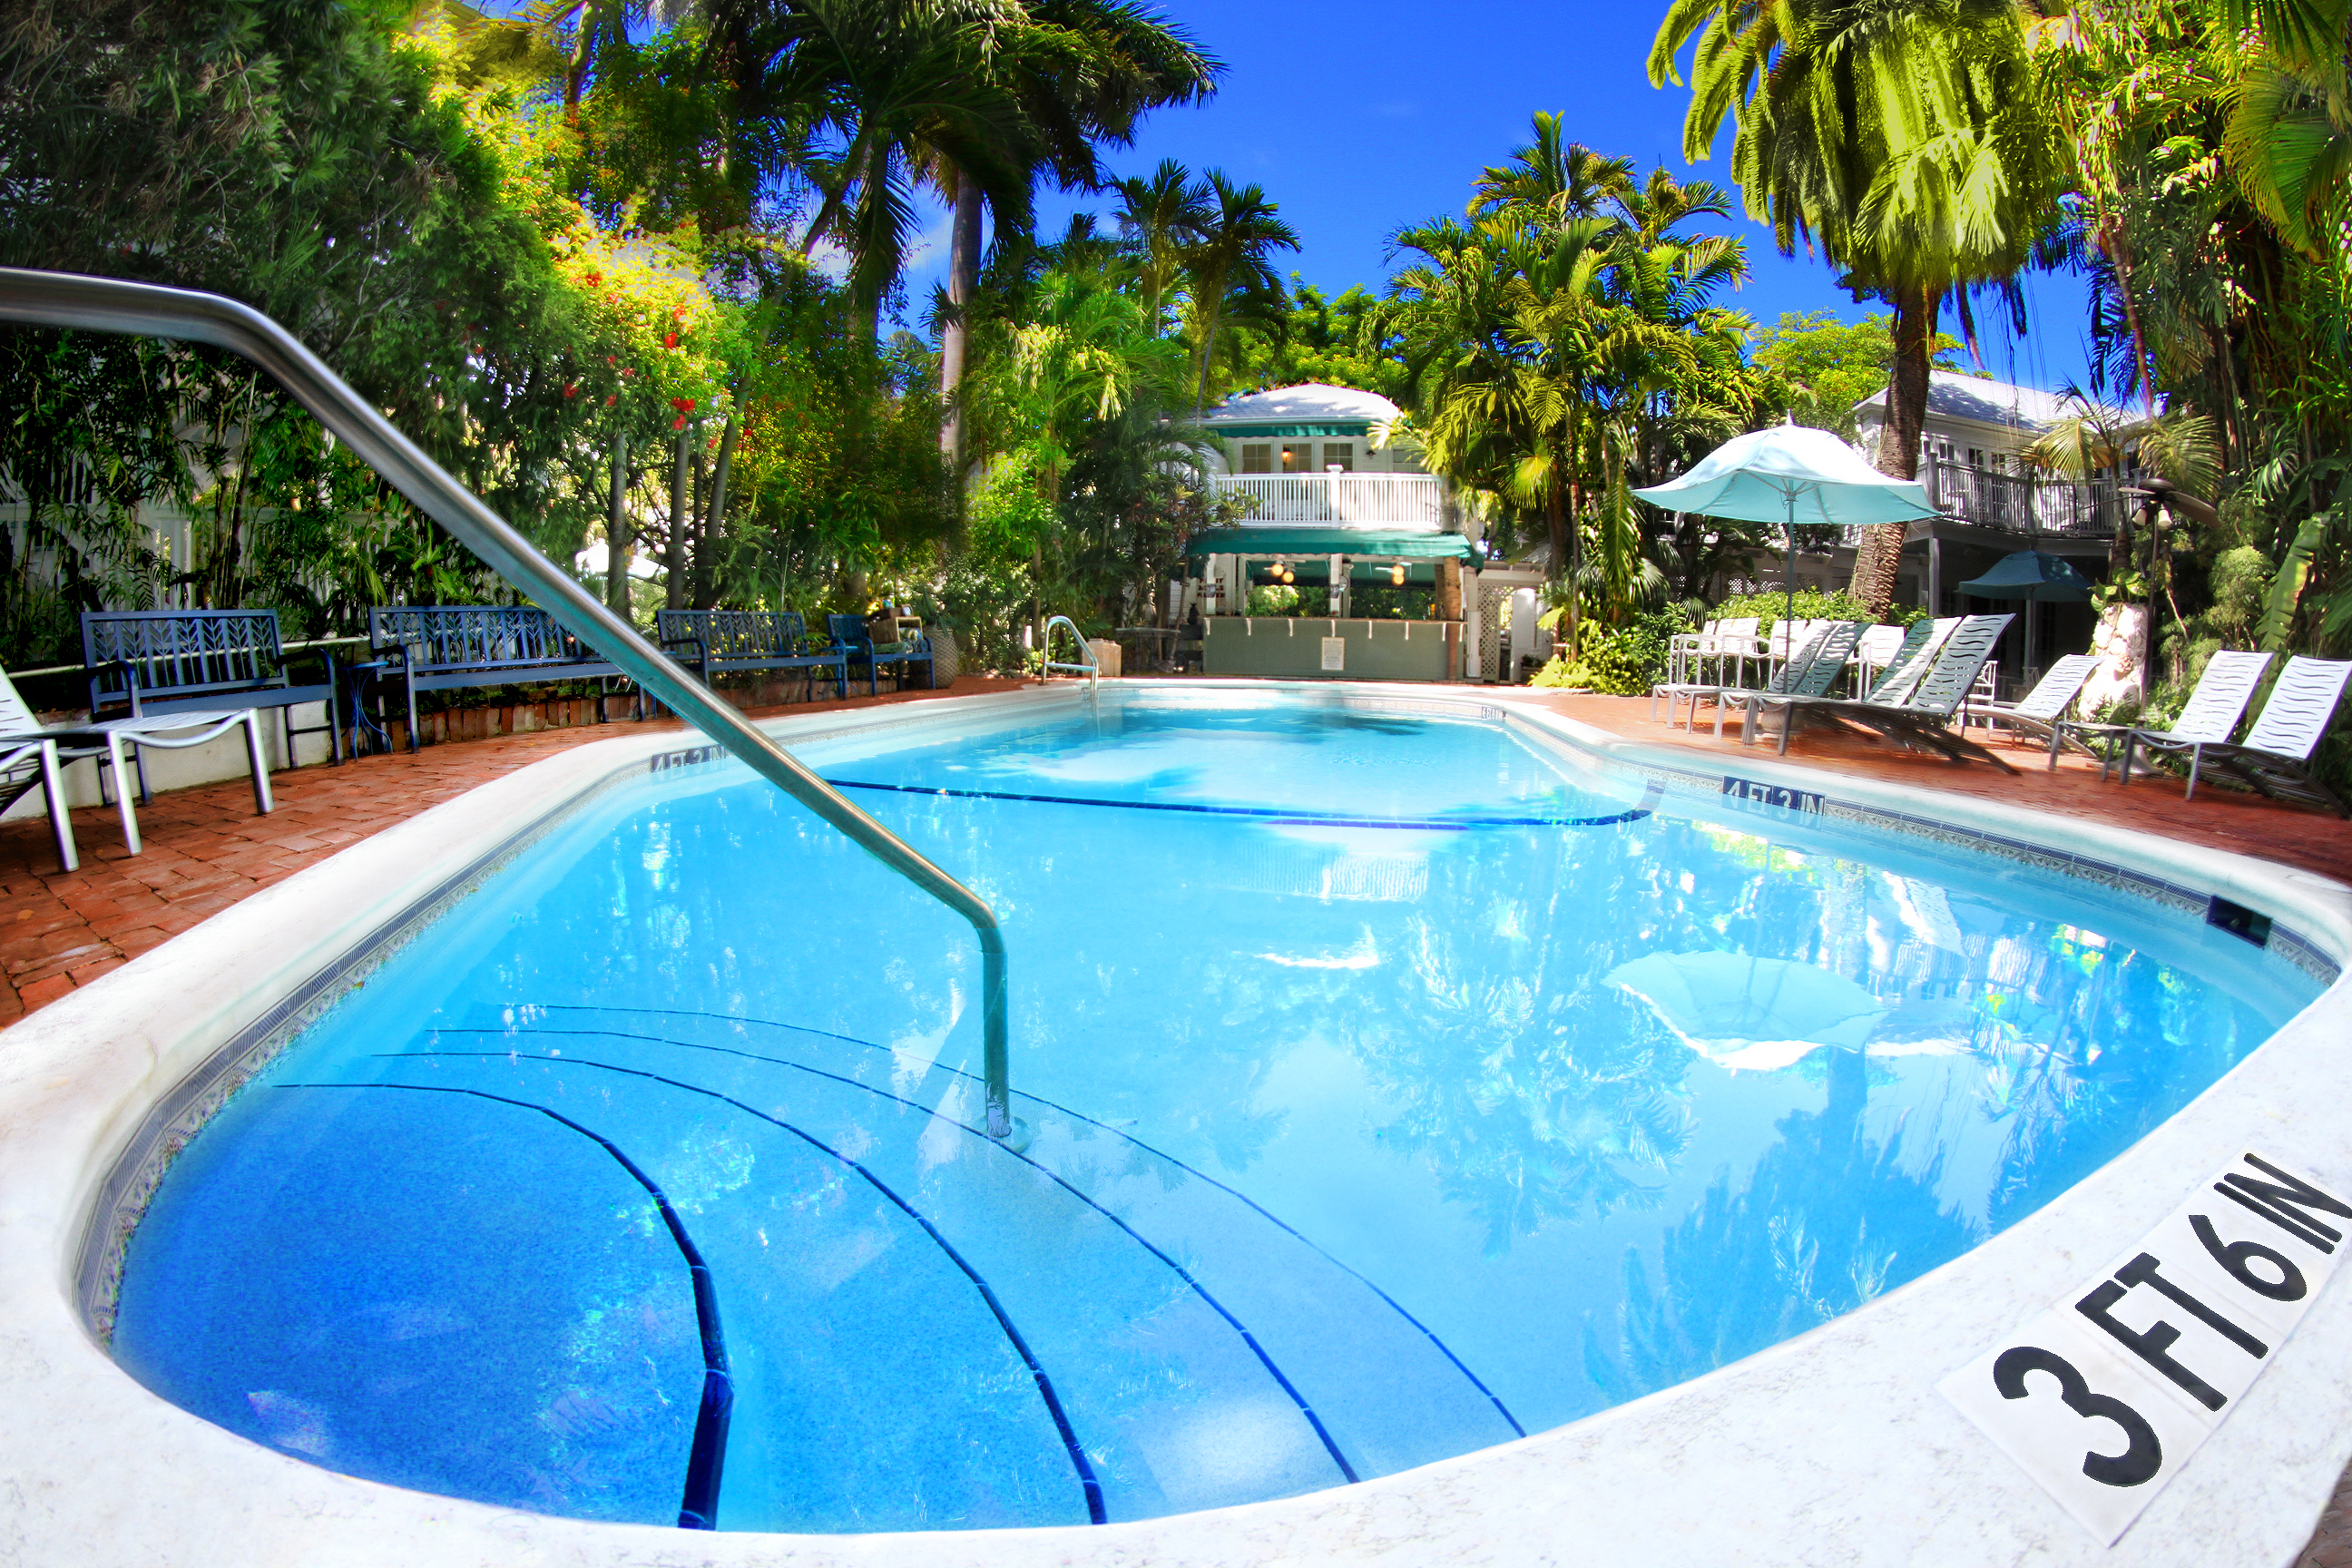 The Gardens Hotel, Key West FL